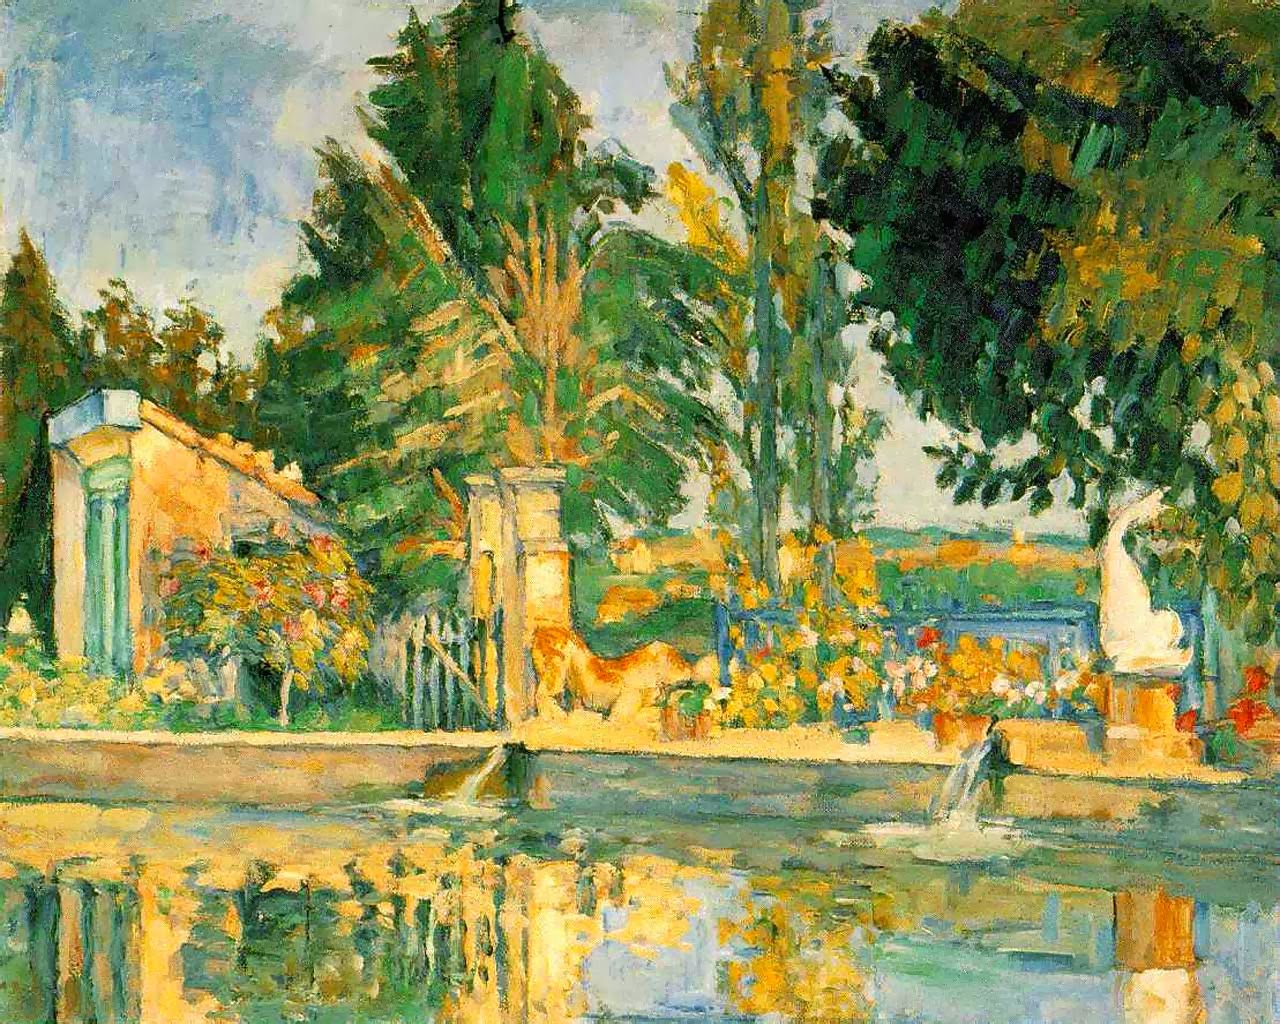 Paul Cézanne en el Museo Thyssen Bornemisza | Paul Cézanne´s exhibition at the Thyssen Bornemisza museum